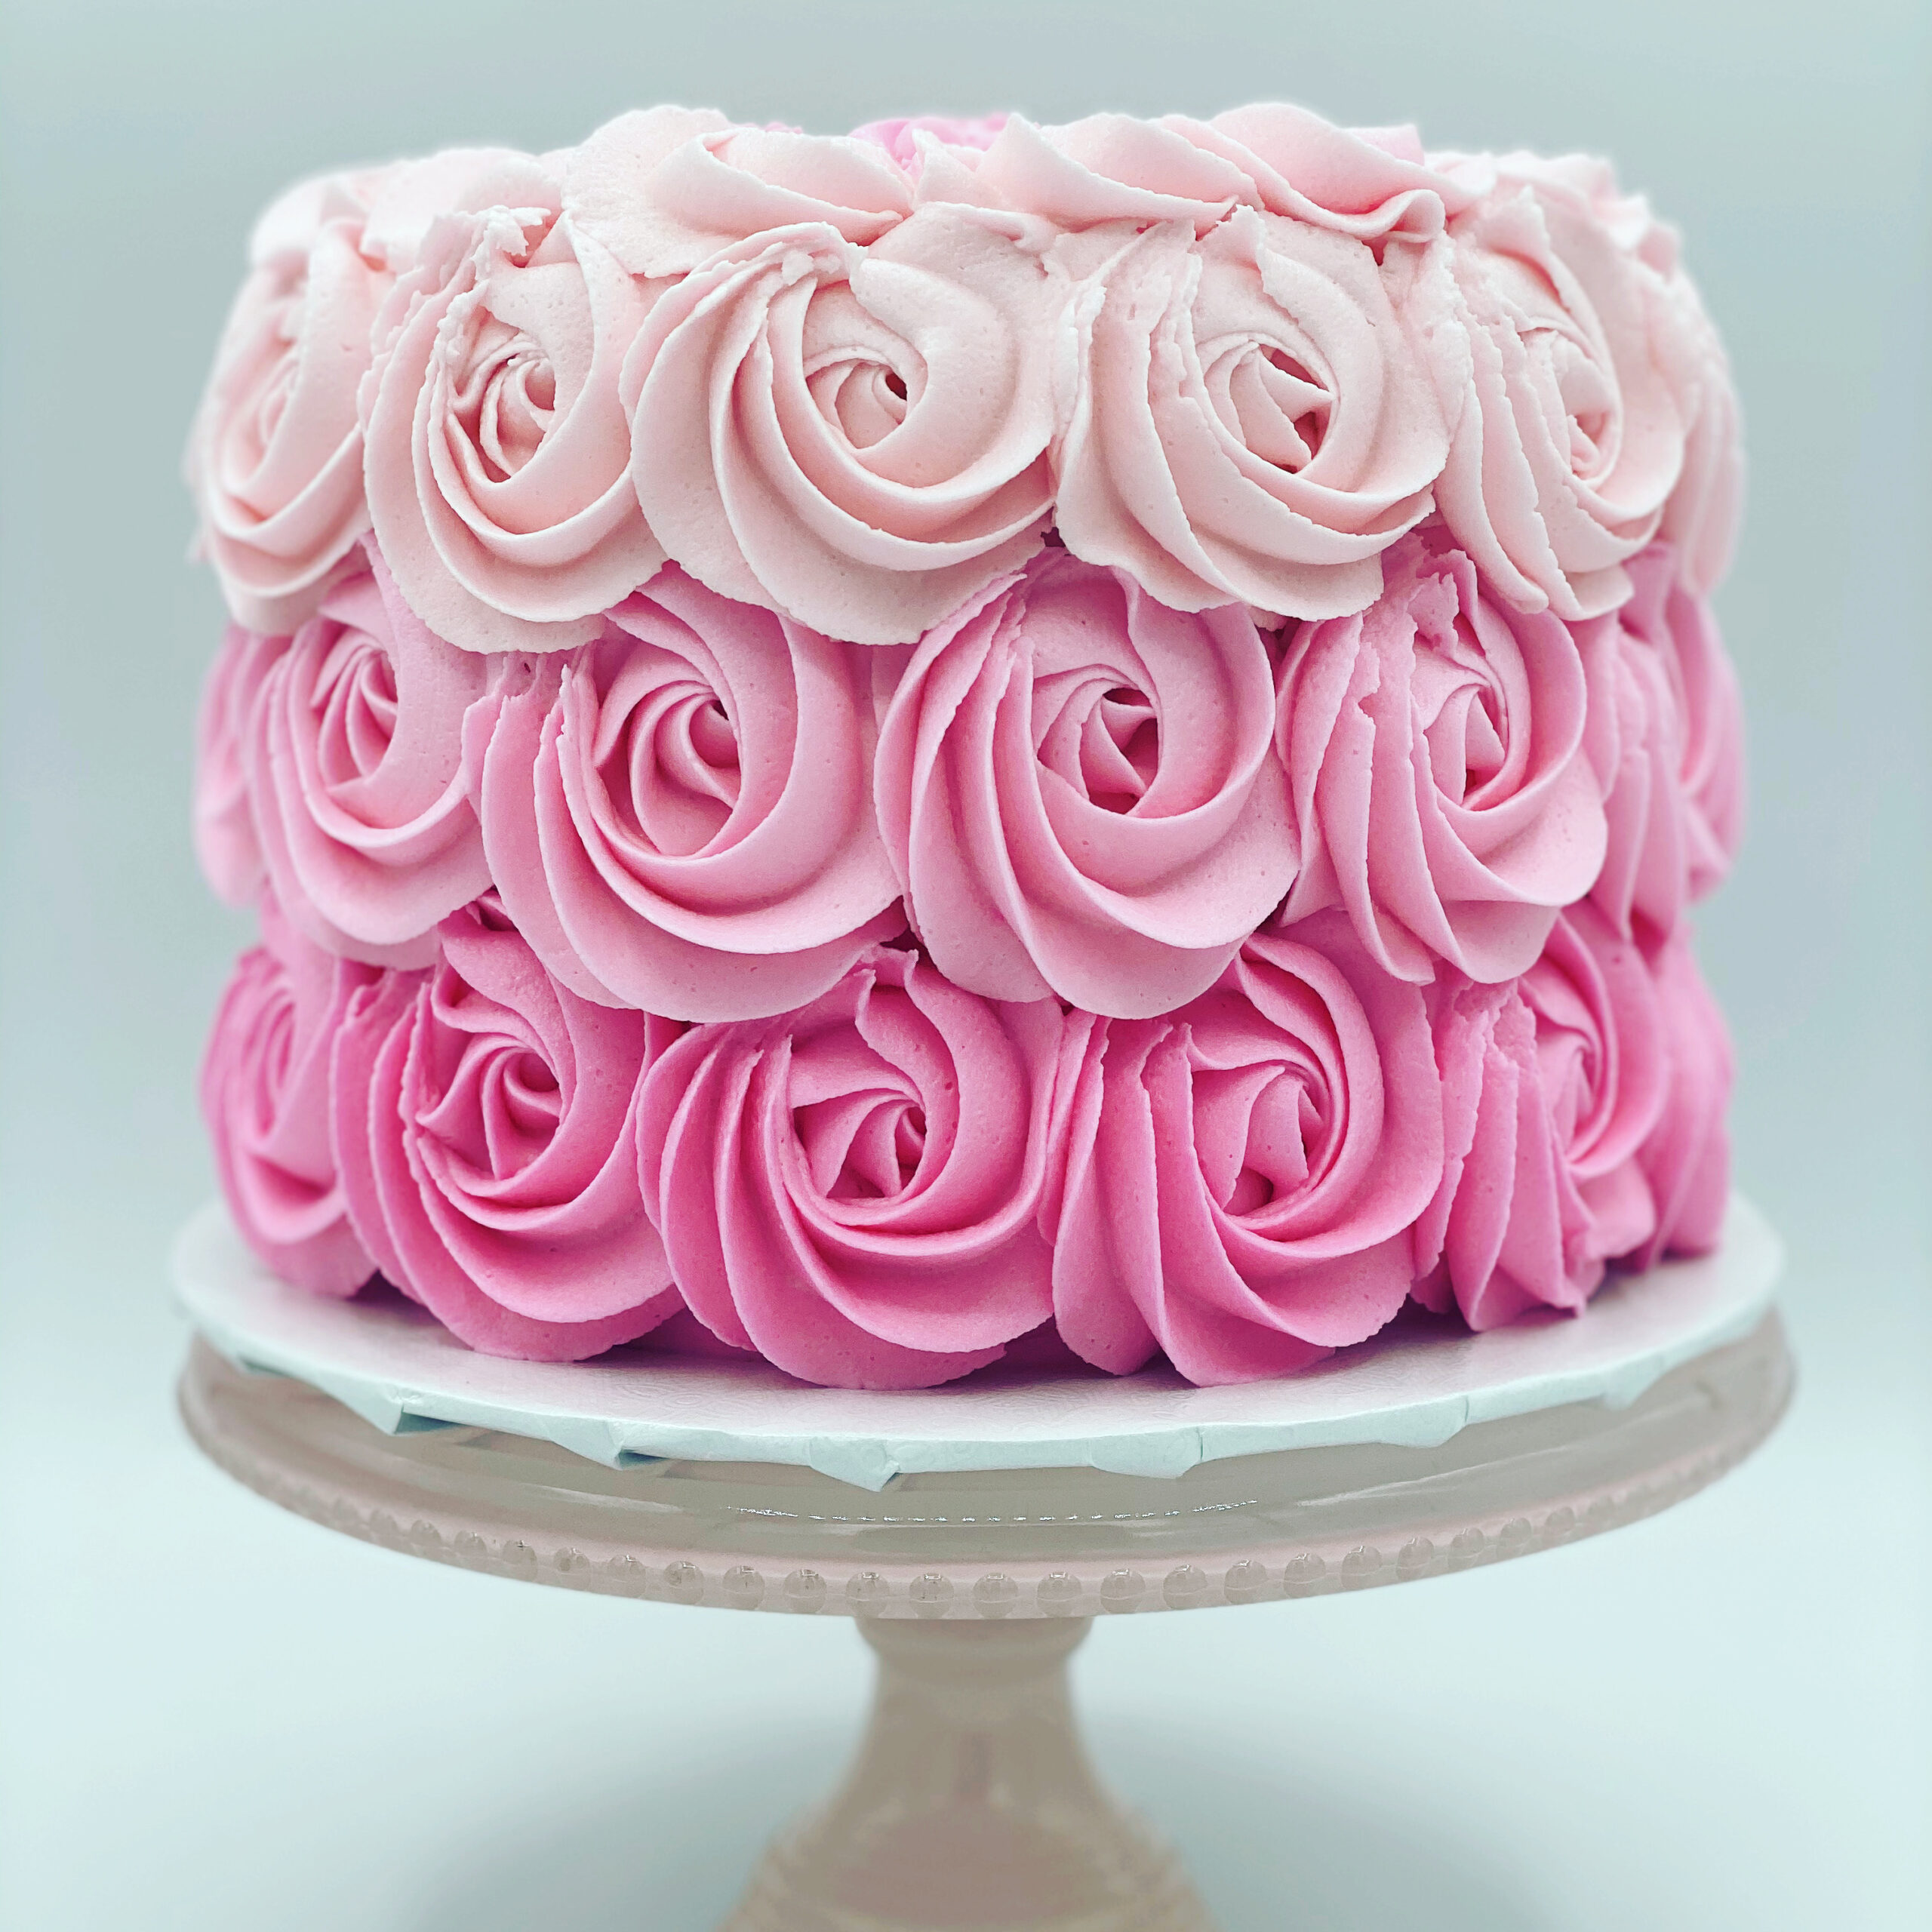 Best Rose Cake In Pune | Order Online